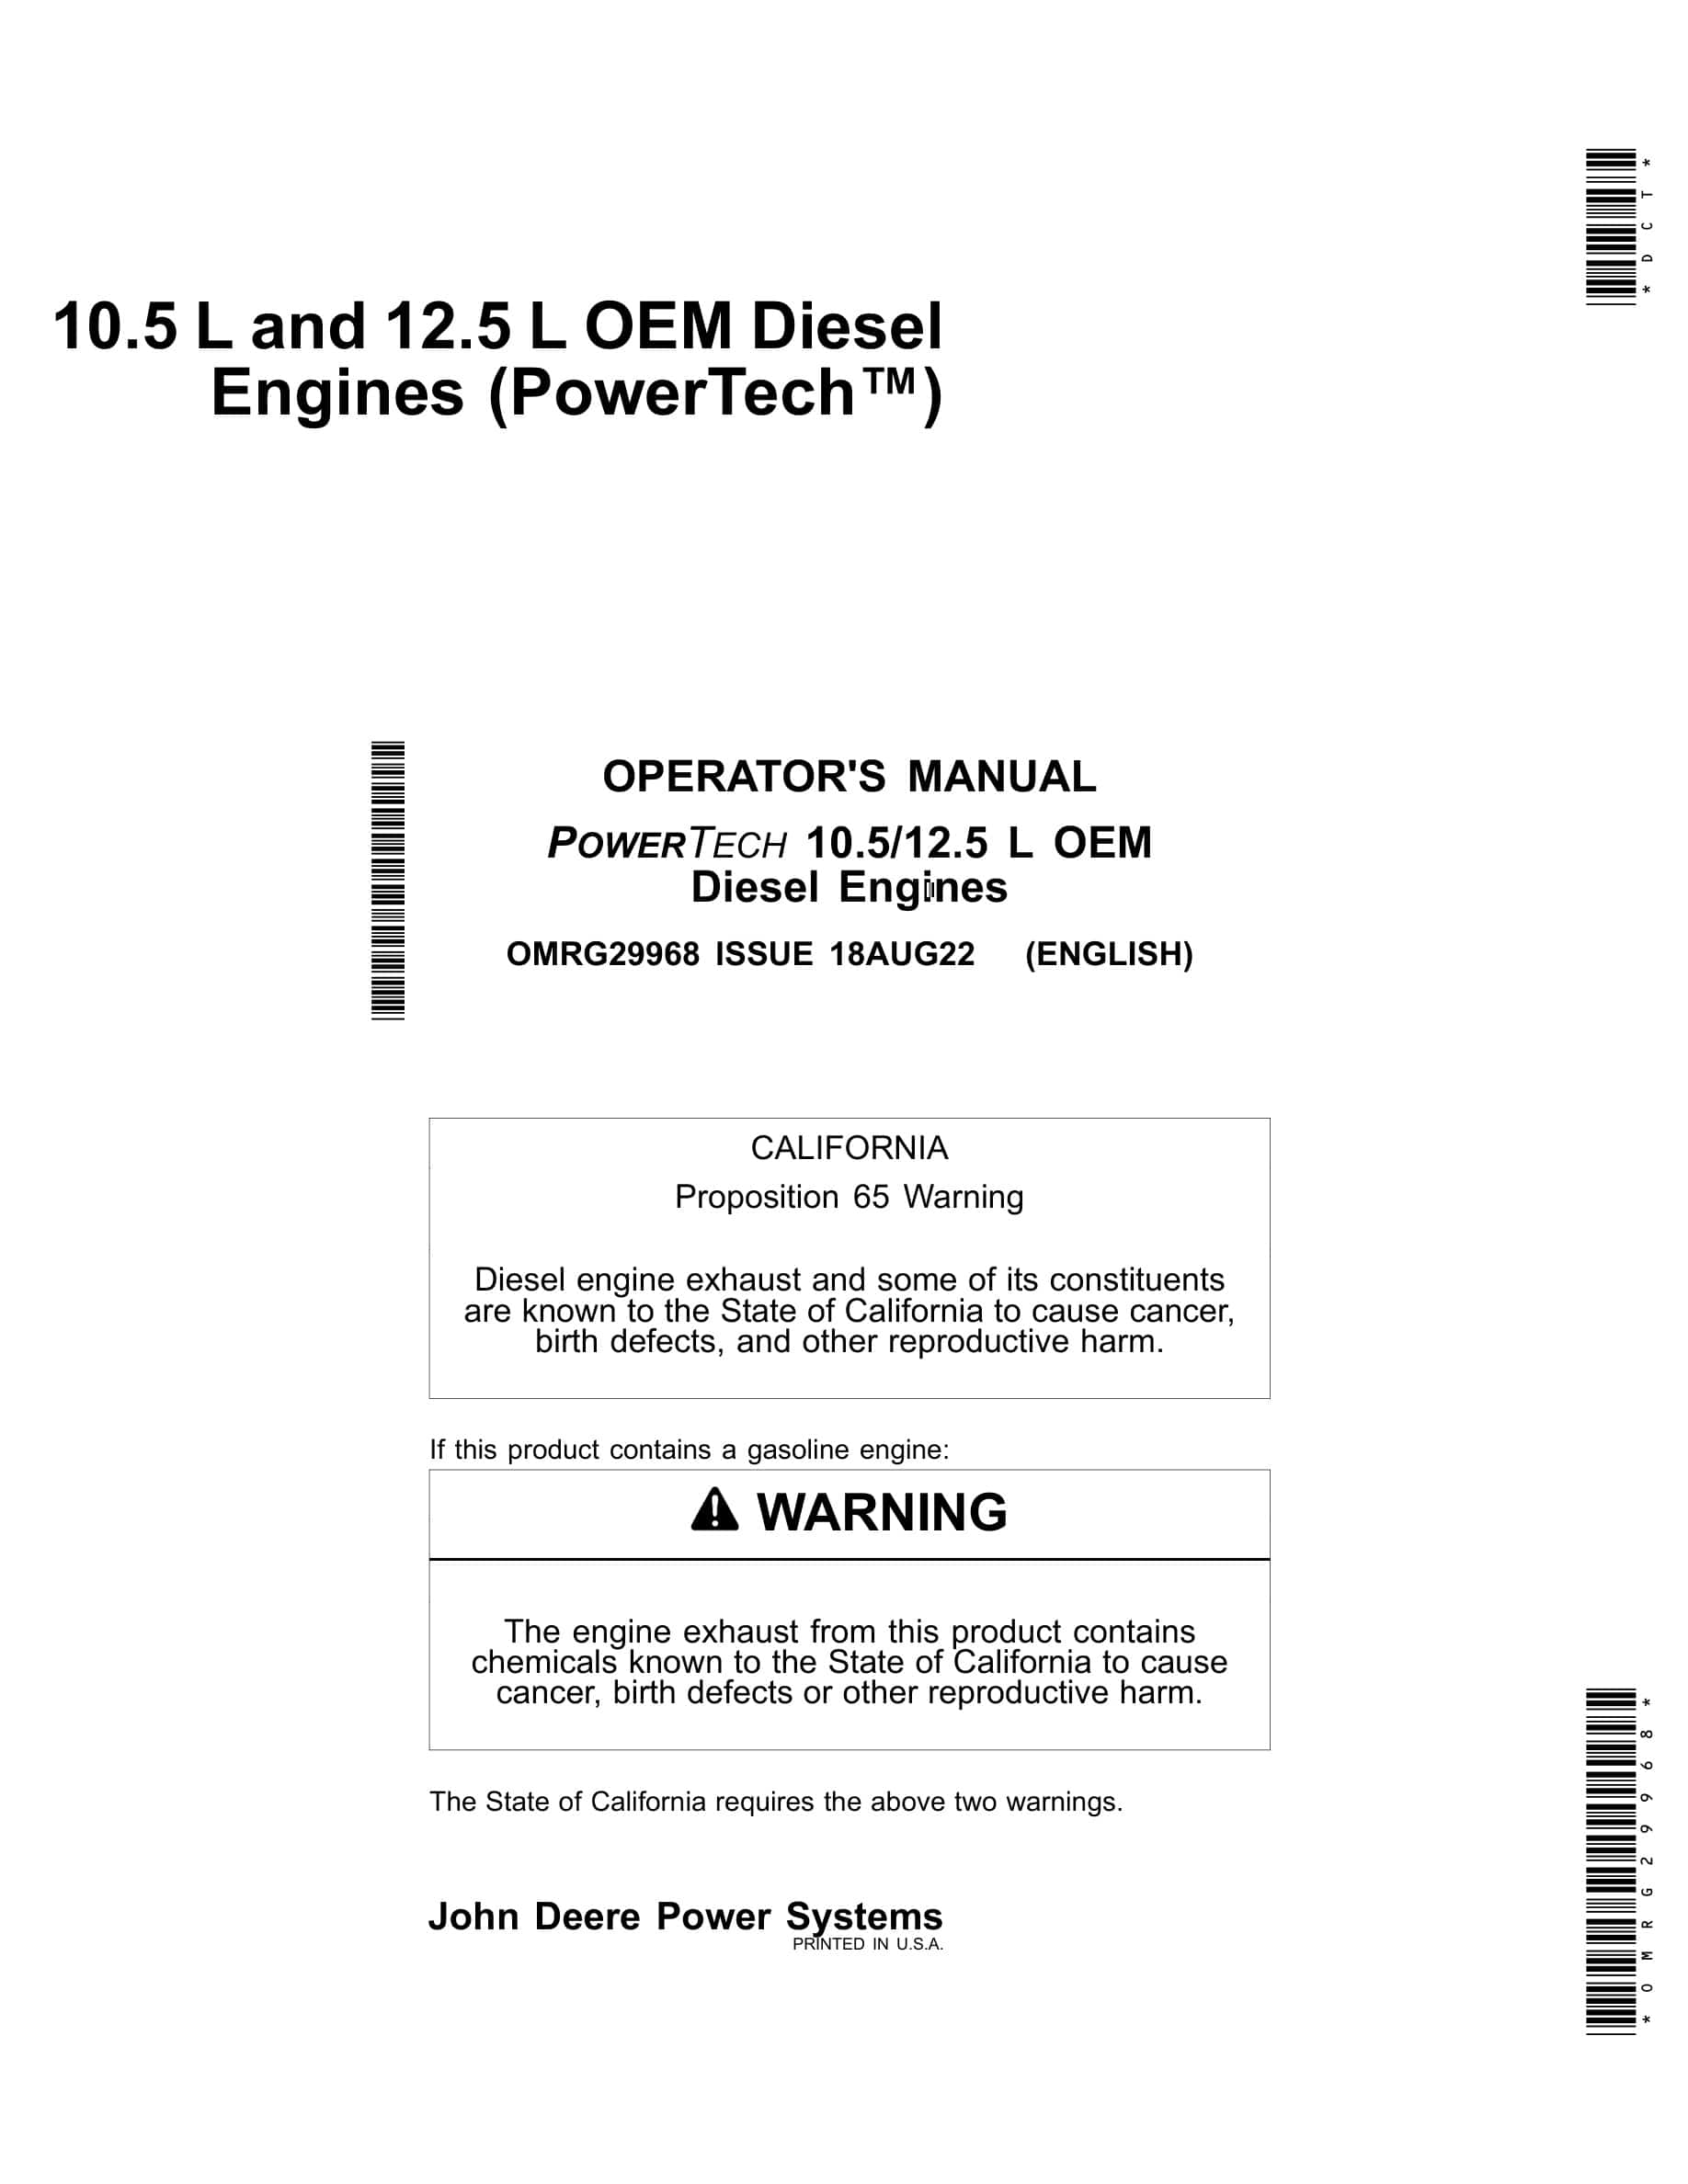 John Deere PowerTech POWERTECH 10.5 12.5 L OEM Diesel Engines Operator Manual OMRG29968-1